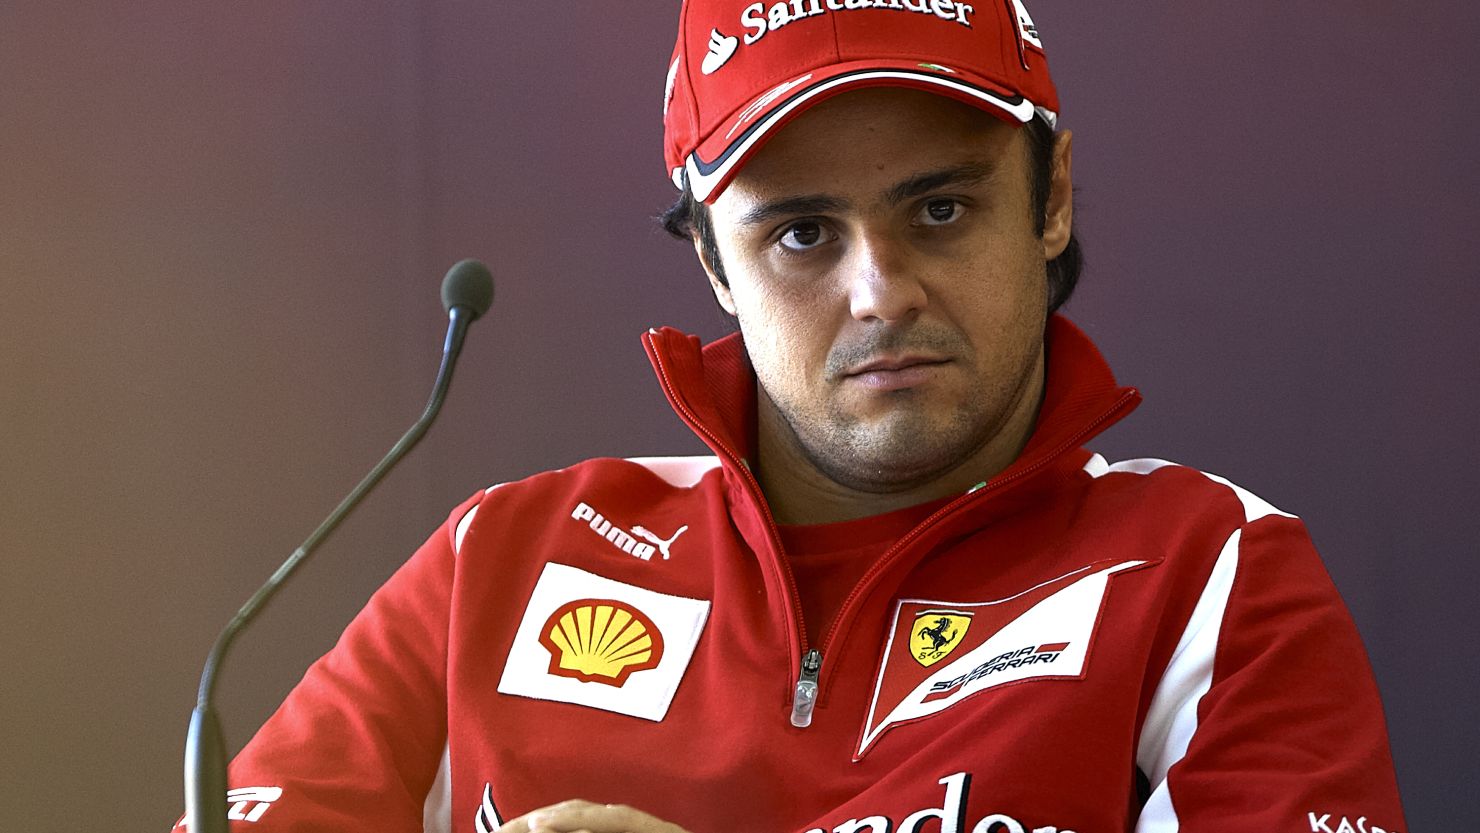 Formula One driver Felipe Massa joined Ferrari from Sauber in 2006.